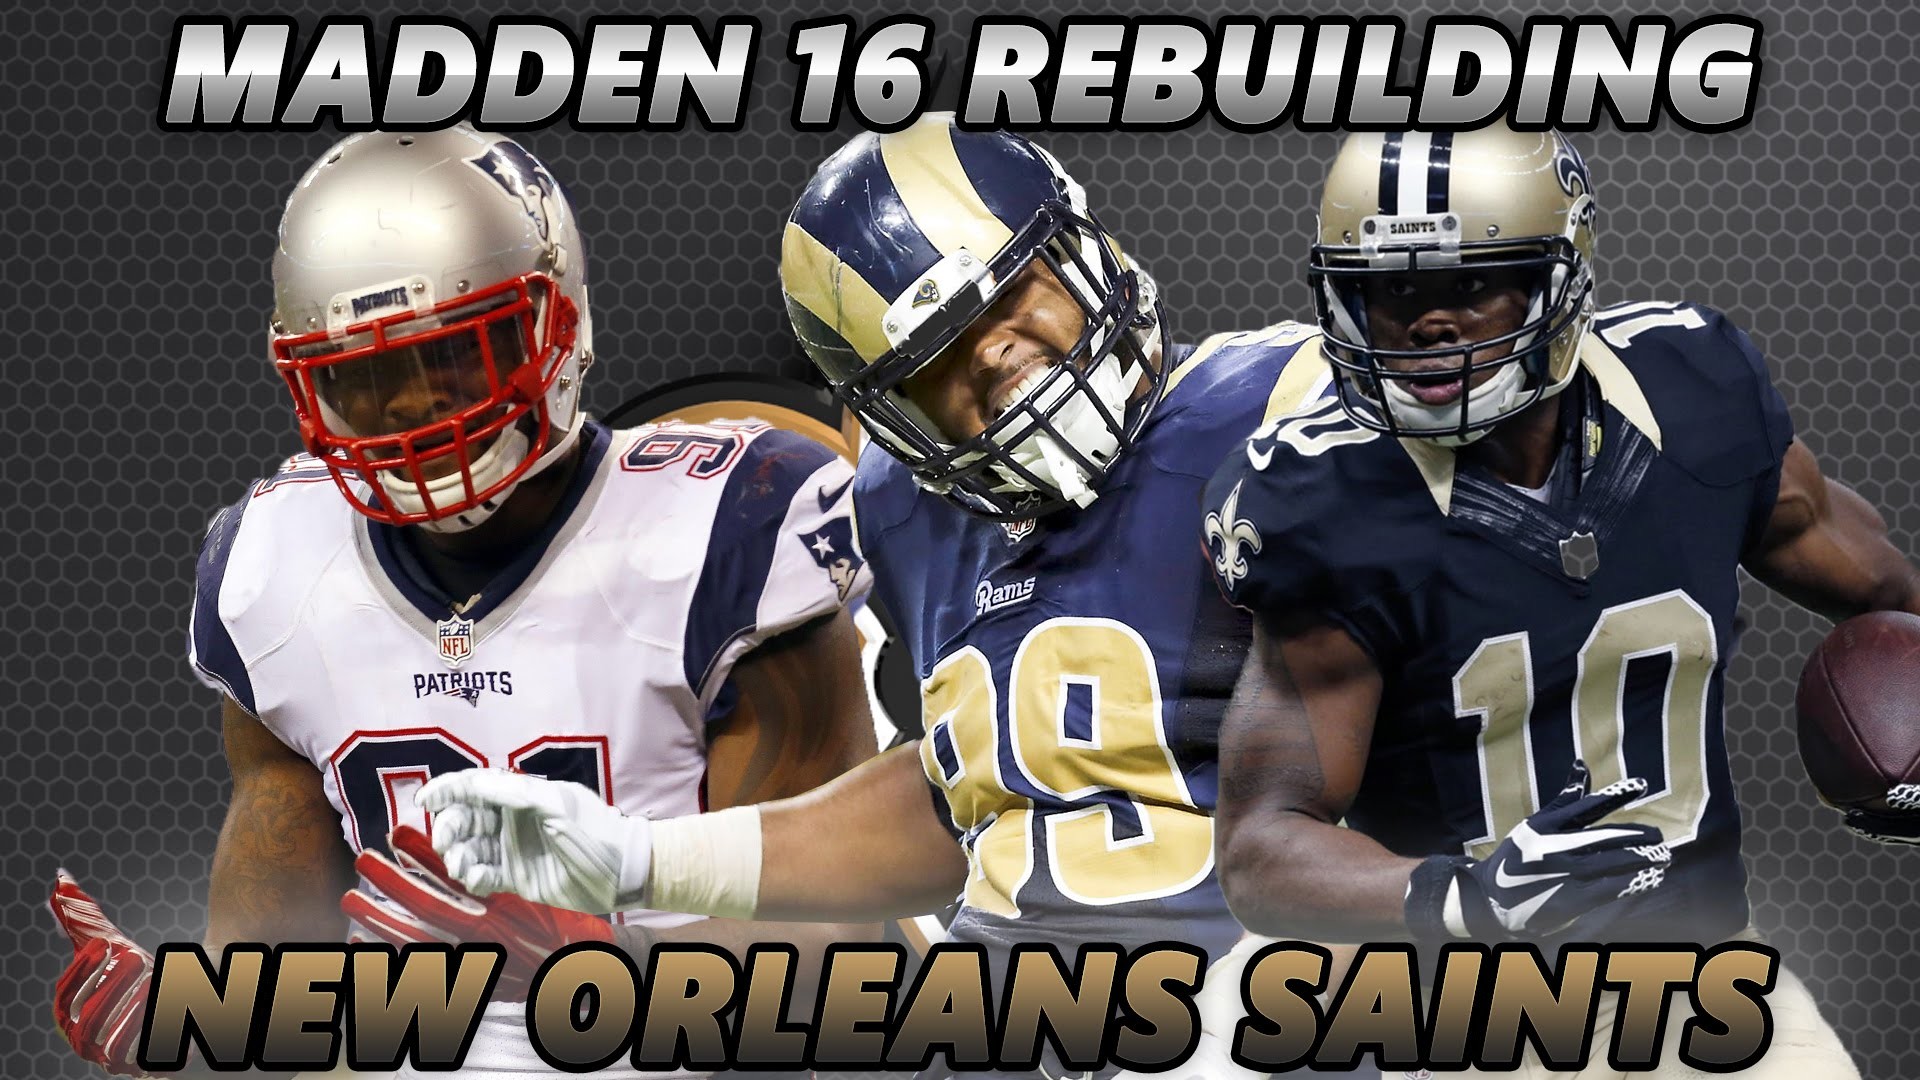 1920x1080 Madden 16 Franchise | Rebuilding The New Orleans Saints